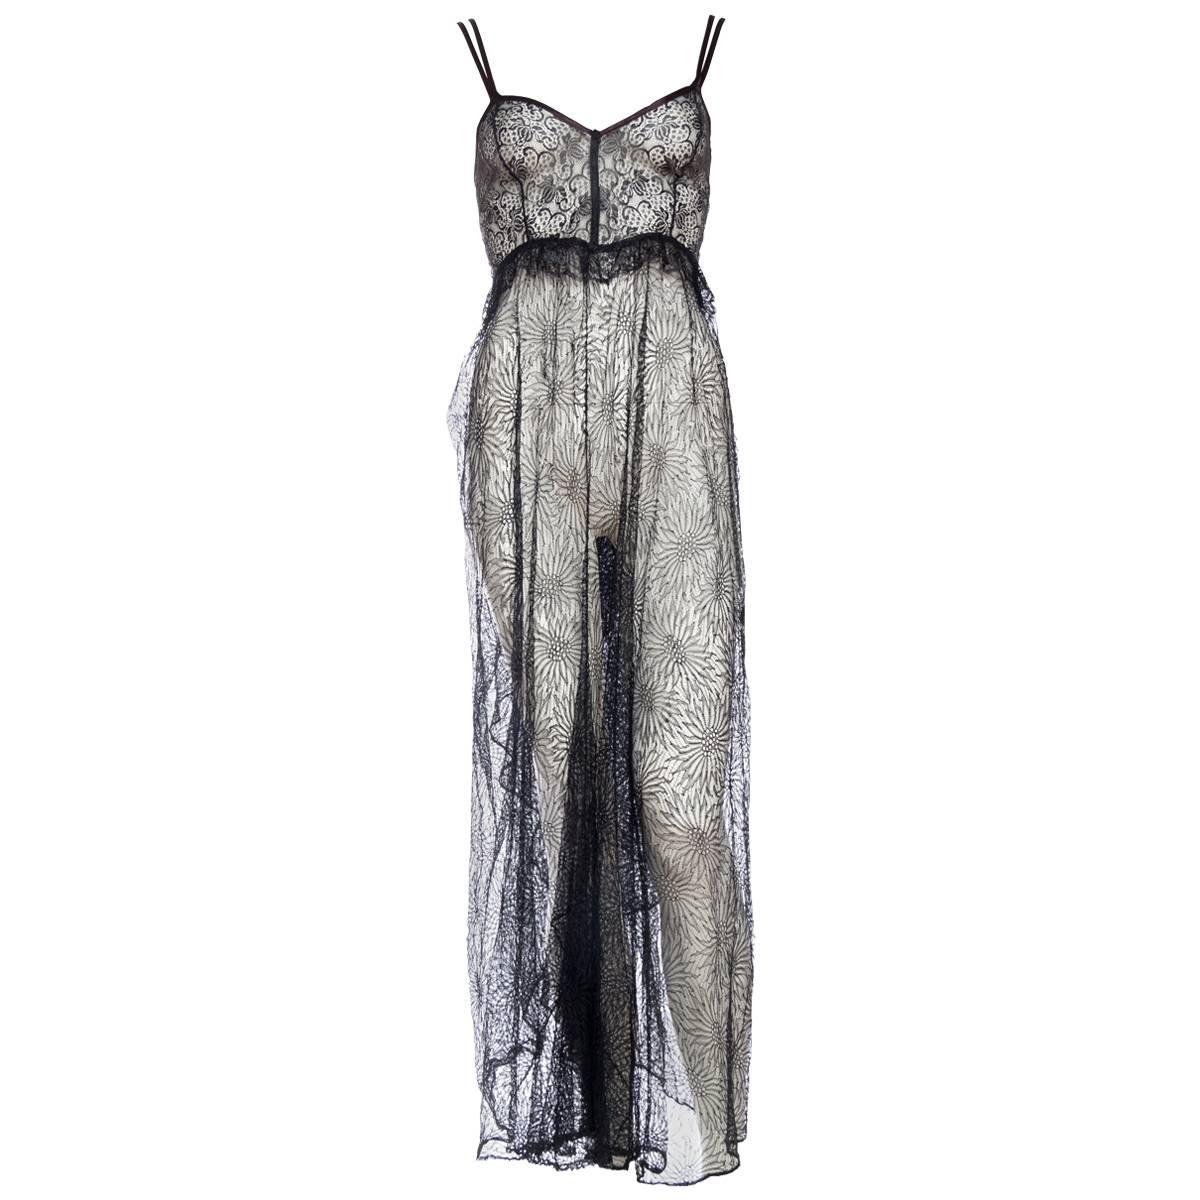 1930s Sheer Black Chantilly Lace Dress